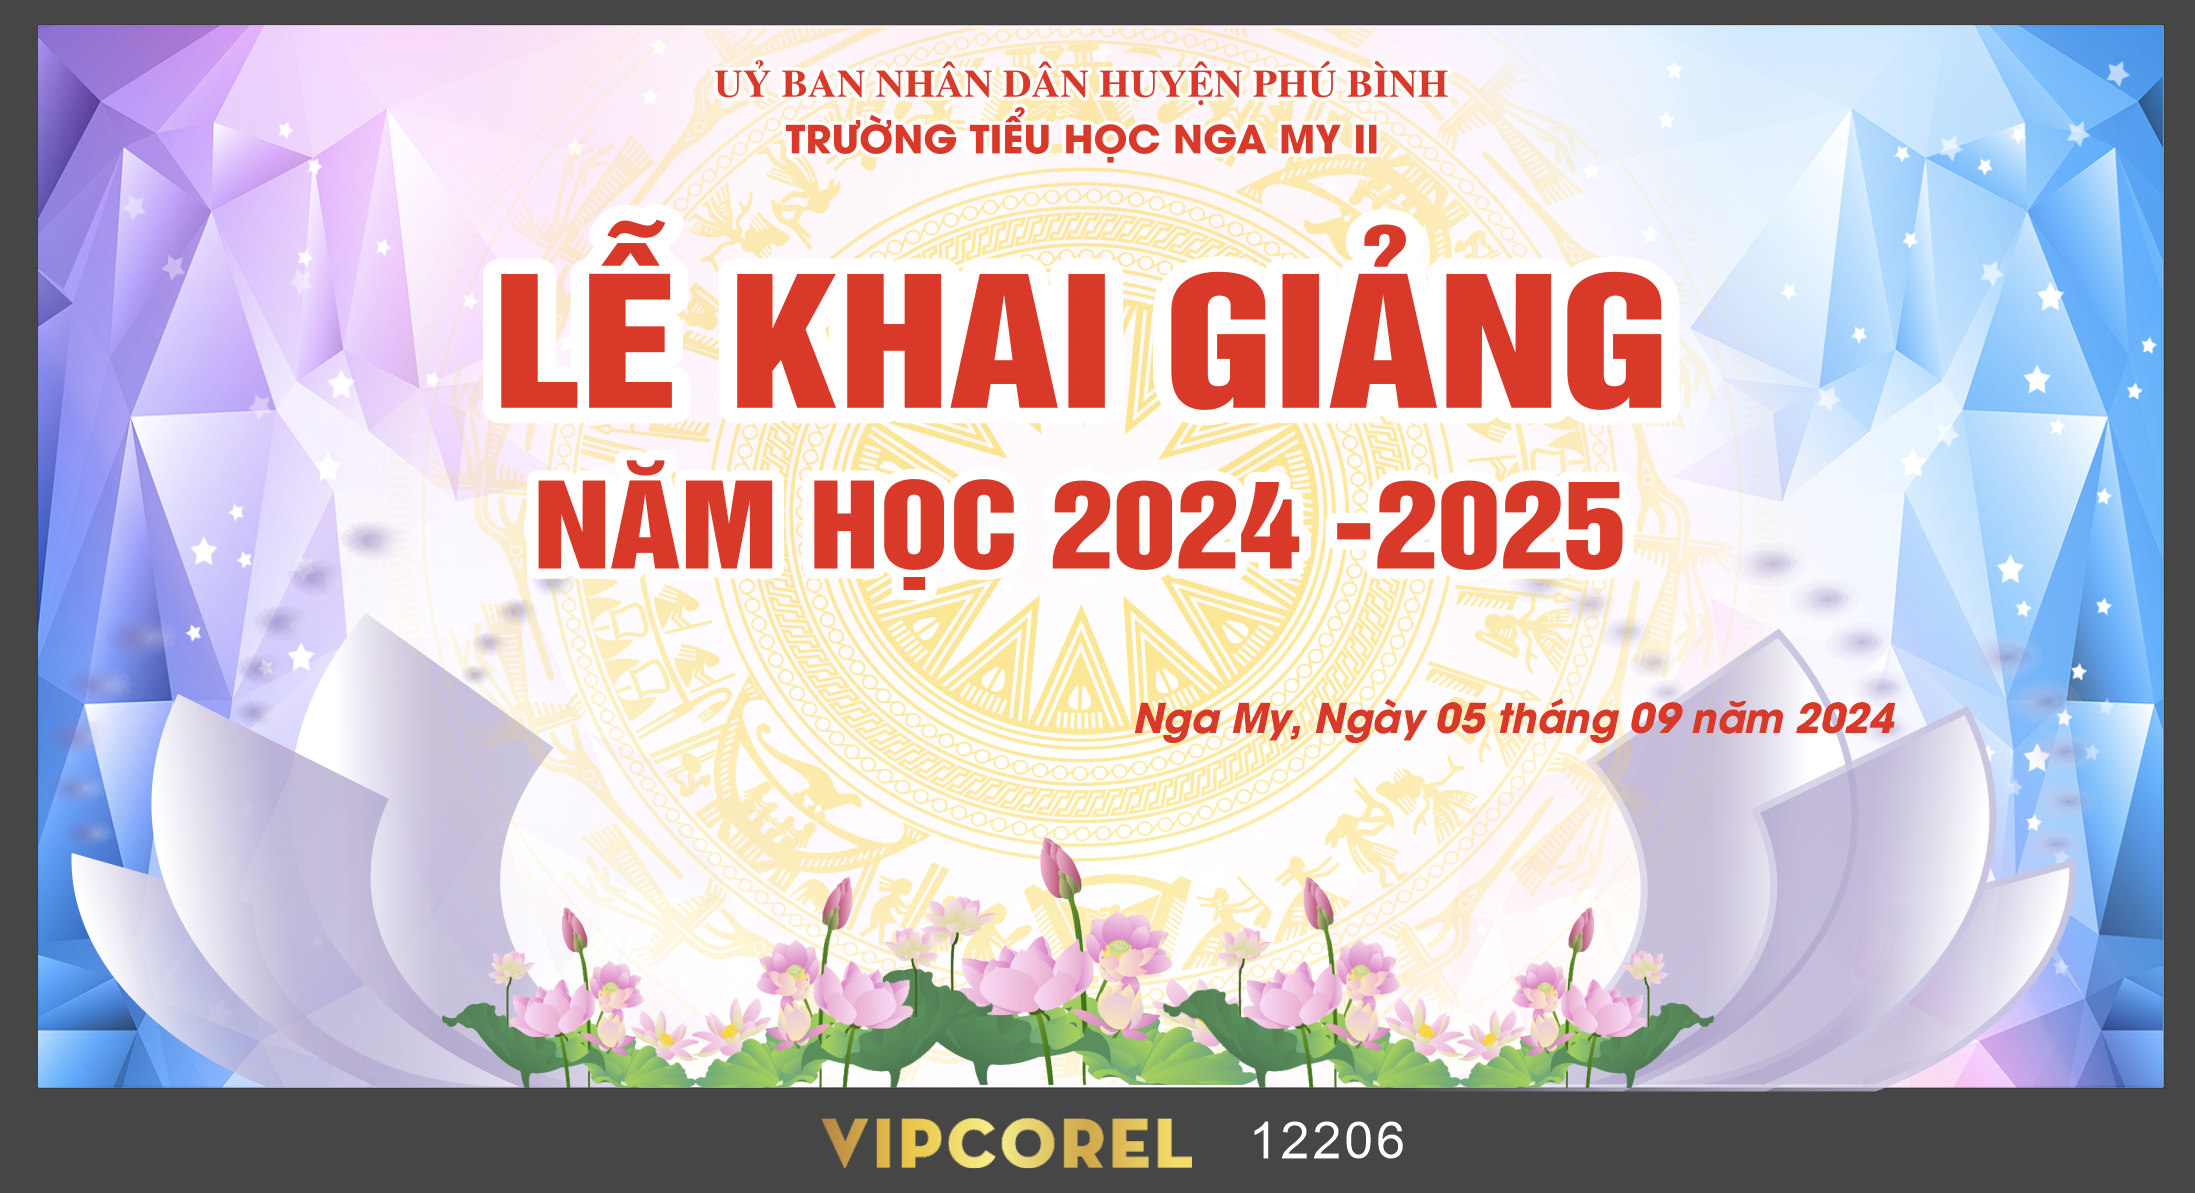 le khai giang 2024-2025 truong tieu hoc #5.png